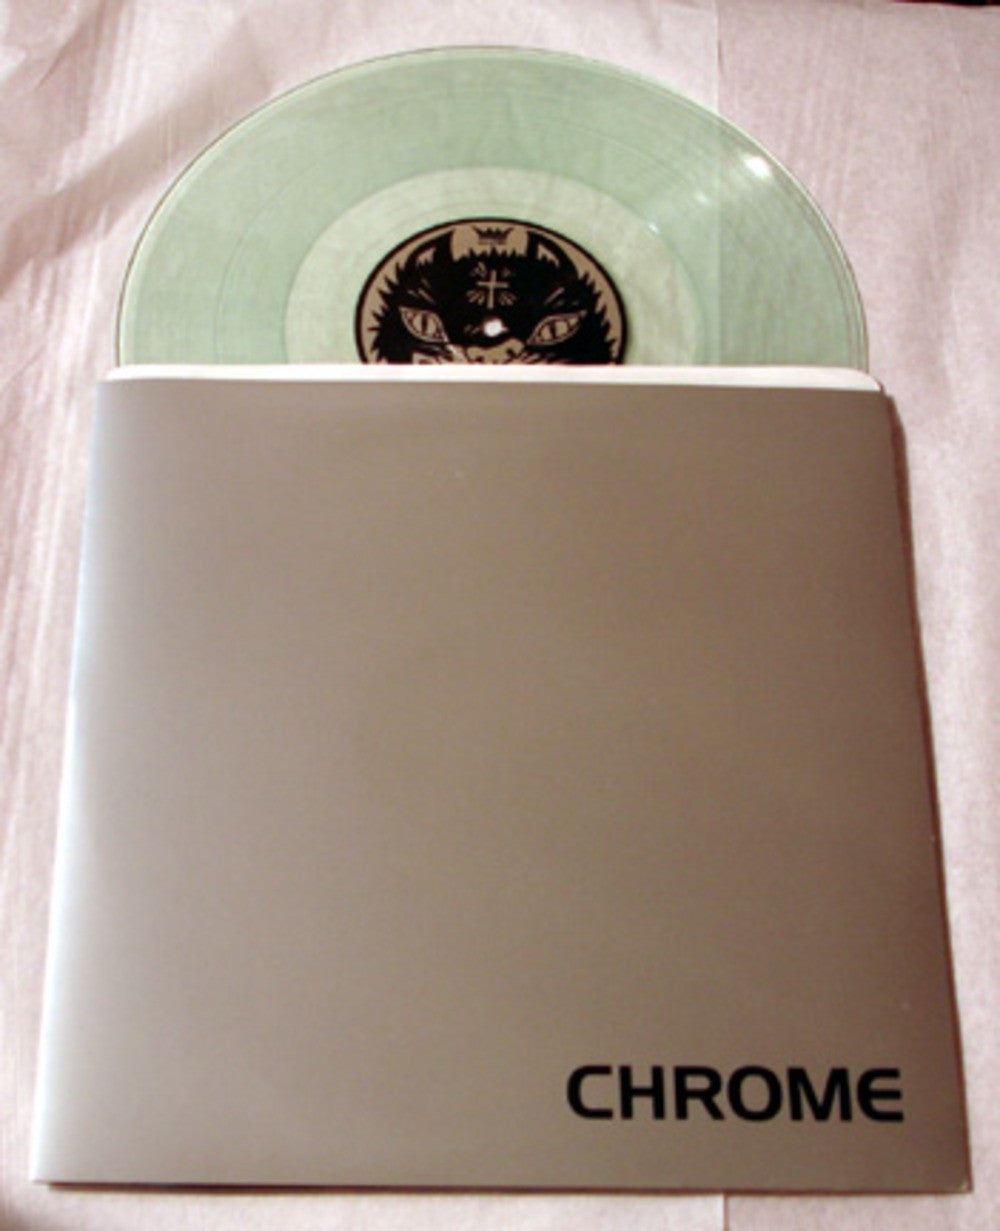 Chrome "Chrome" 1996 Colored Vinyl Art By Kozik